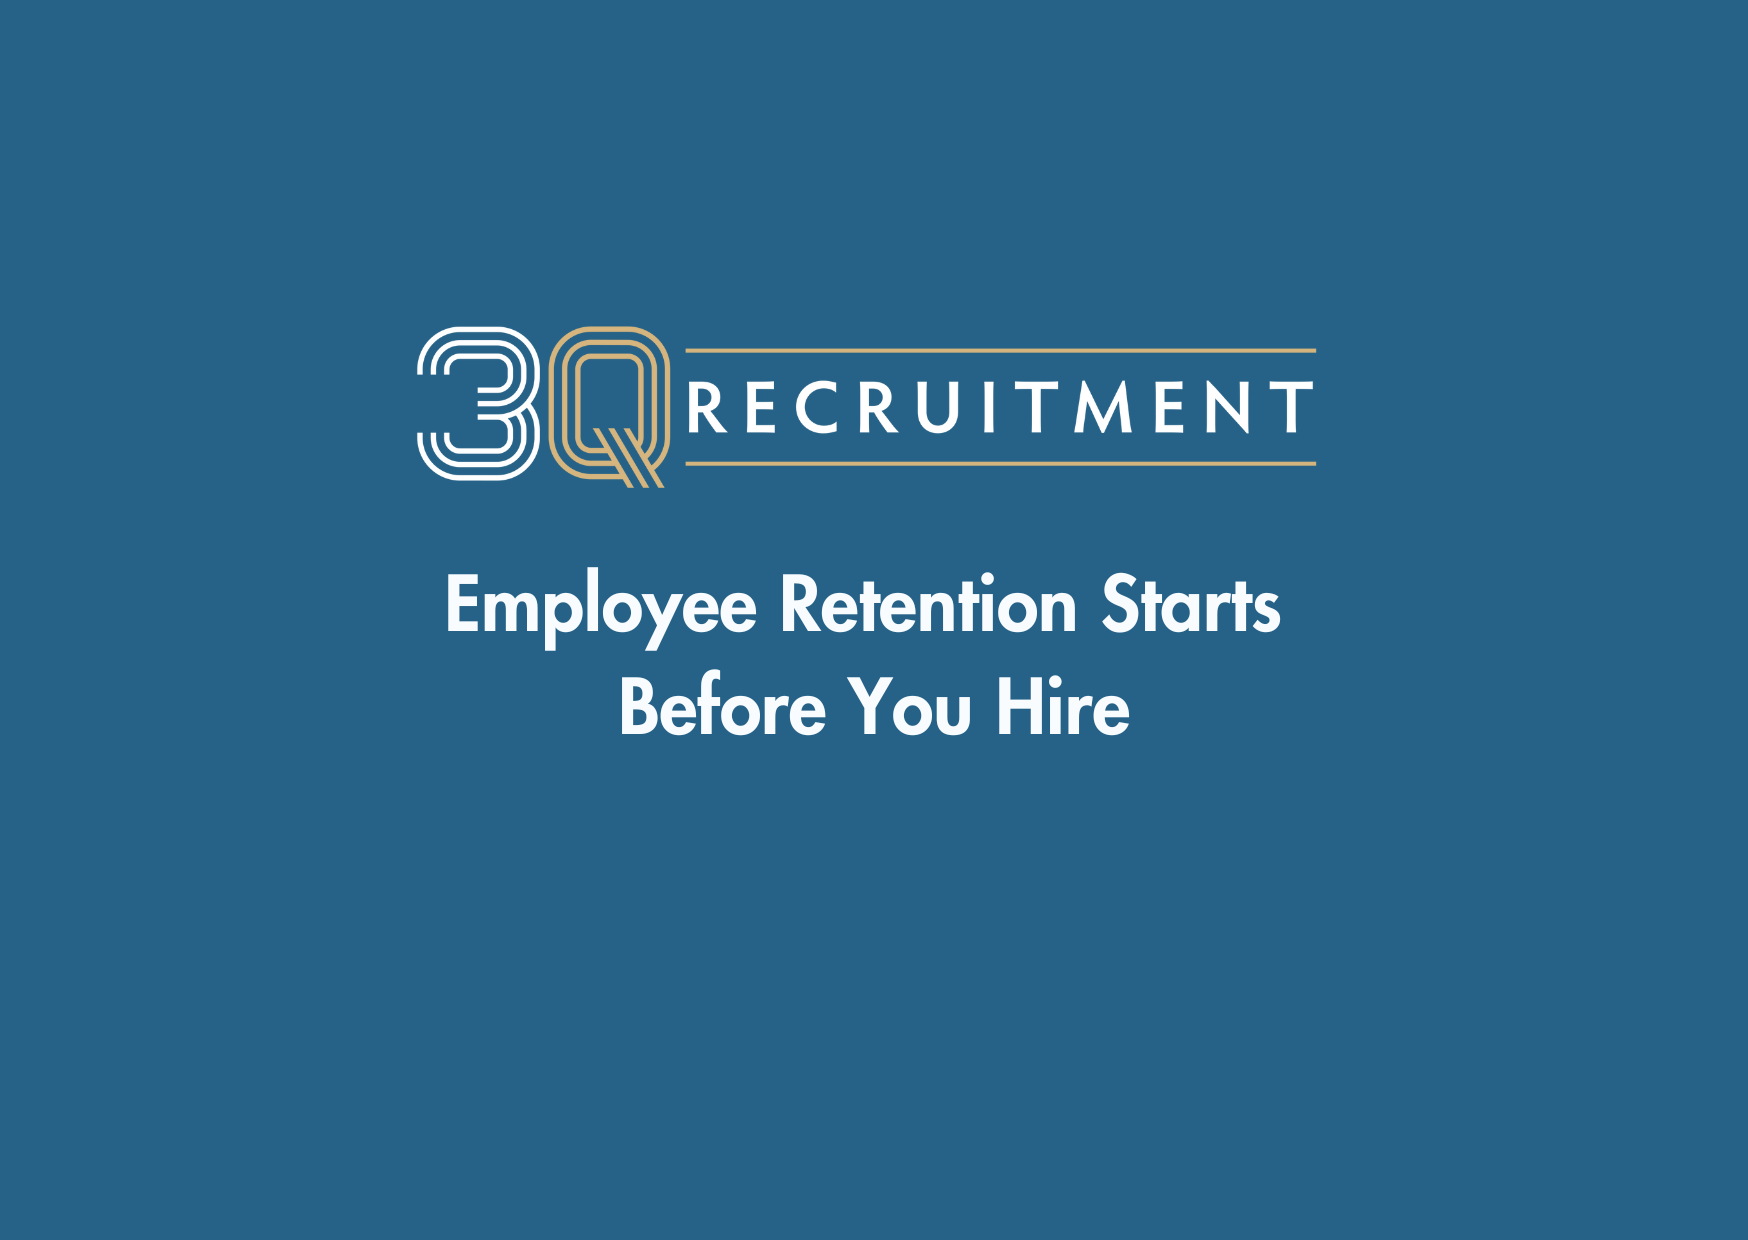 3Q Recruitment Employee Retention Starts Before You Hire